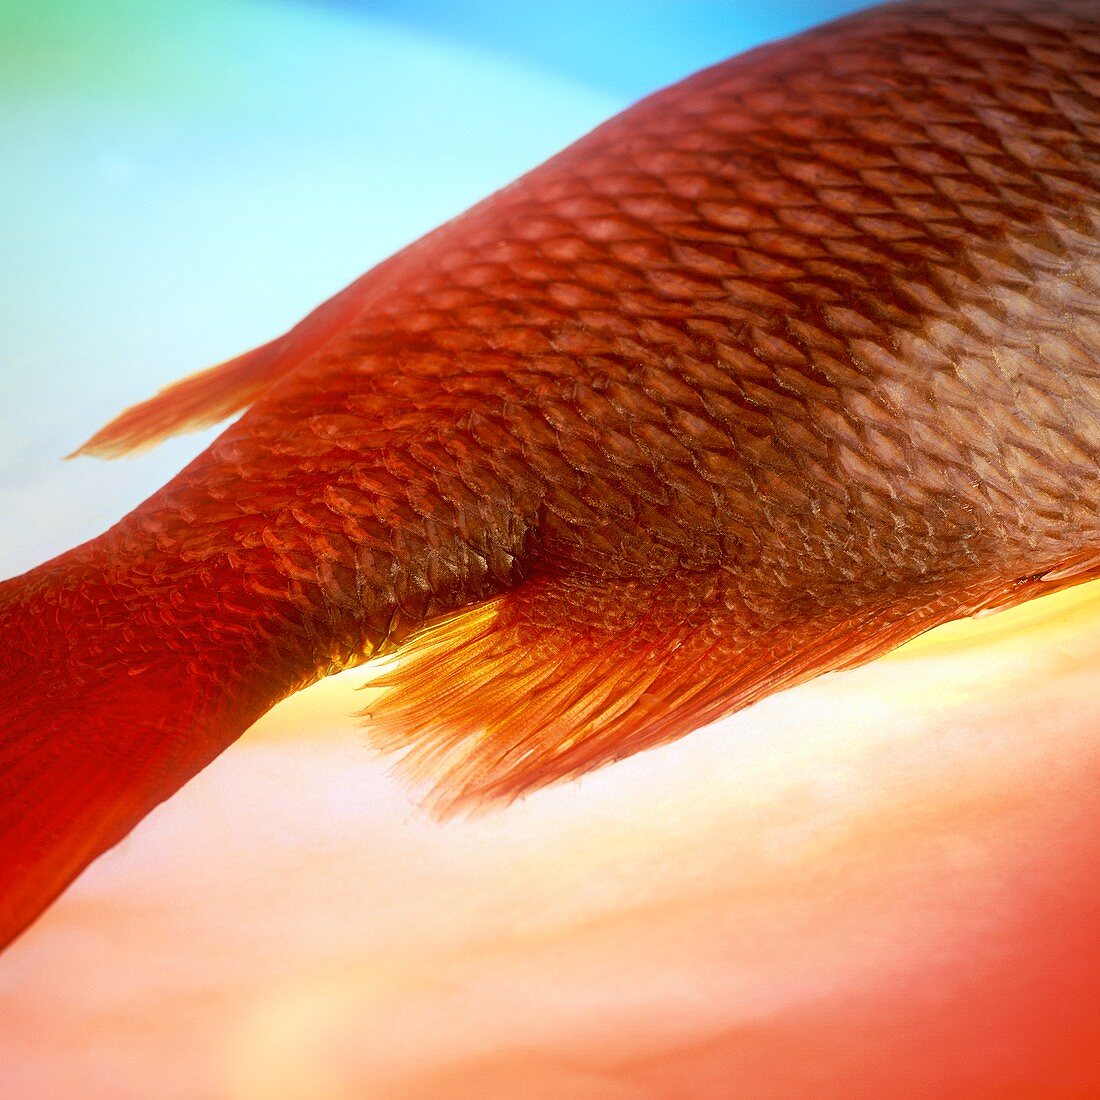 Fish tail